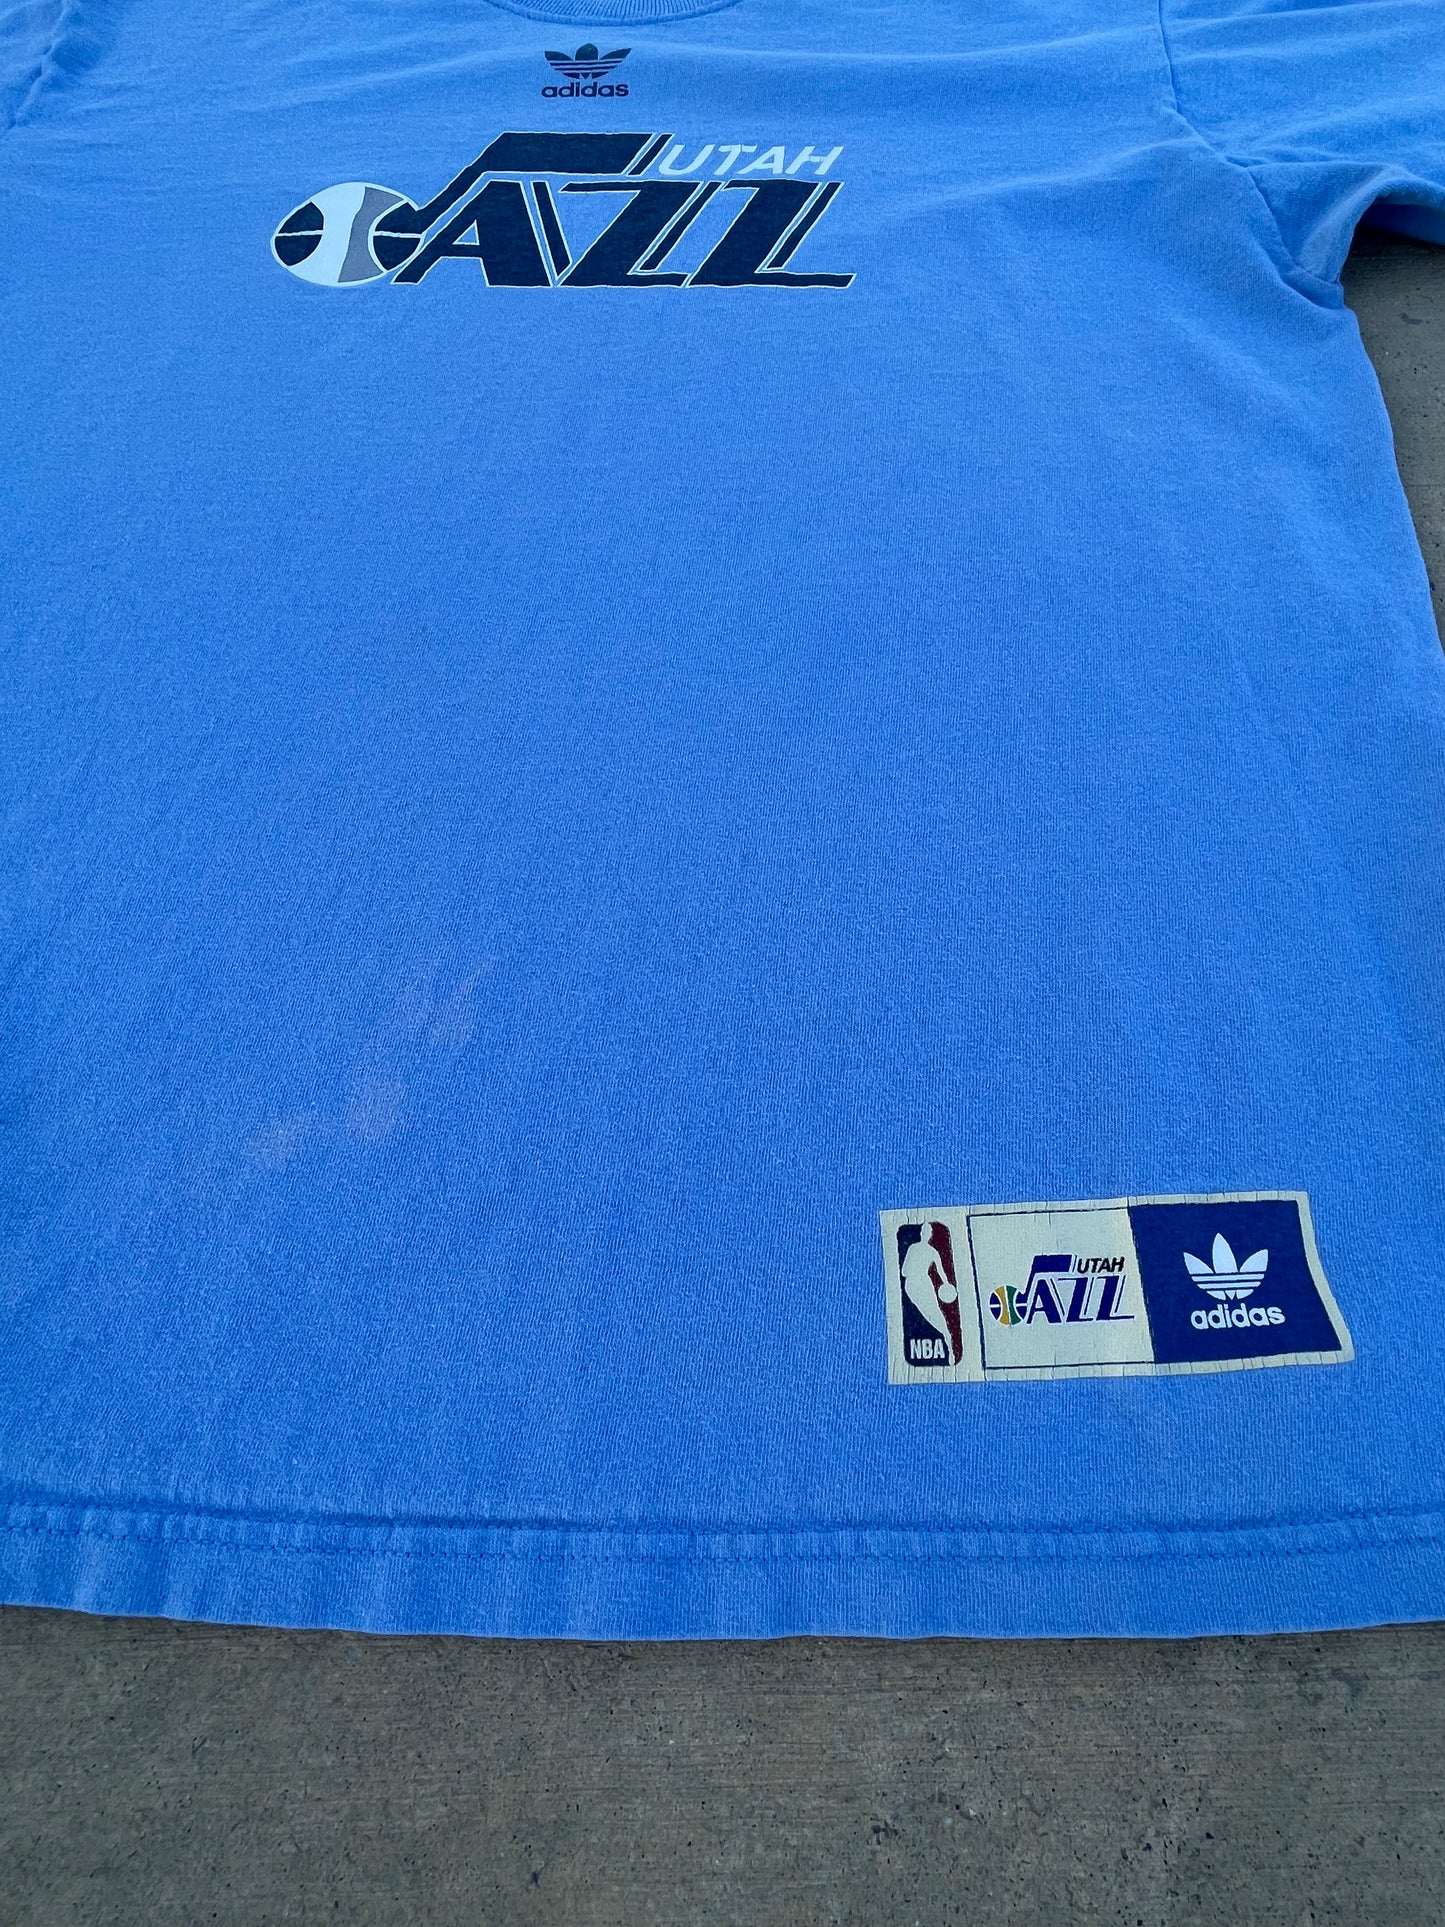 Adidas Utah Jazz T-Shirt